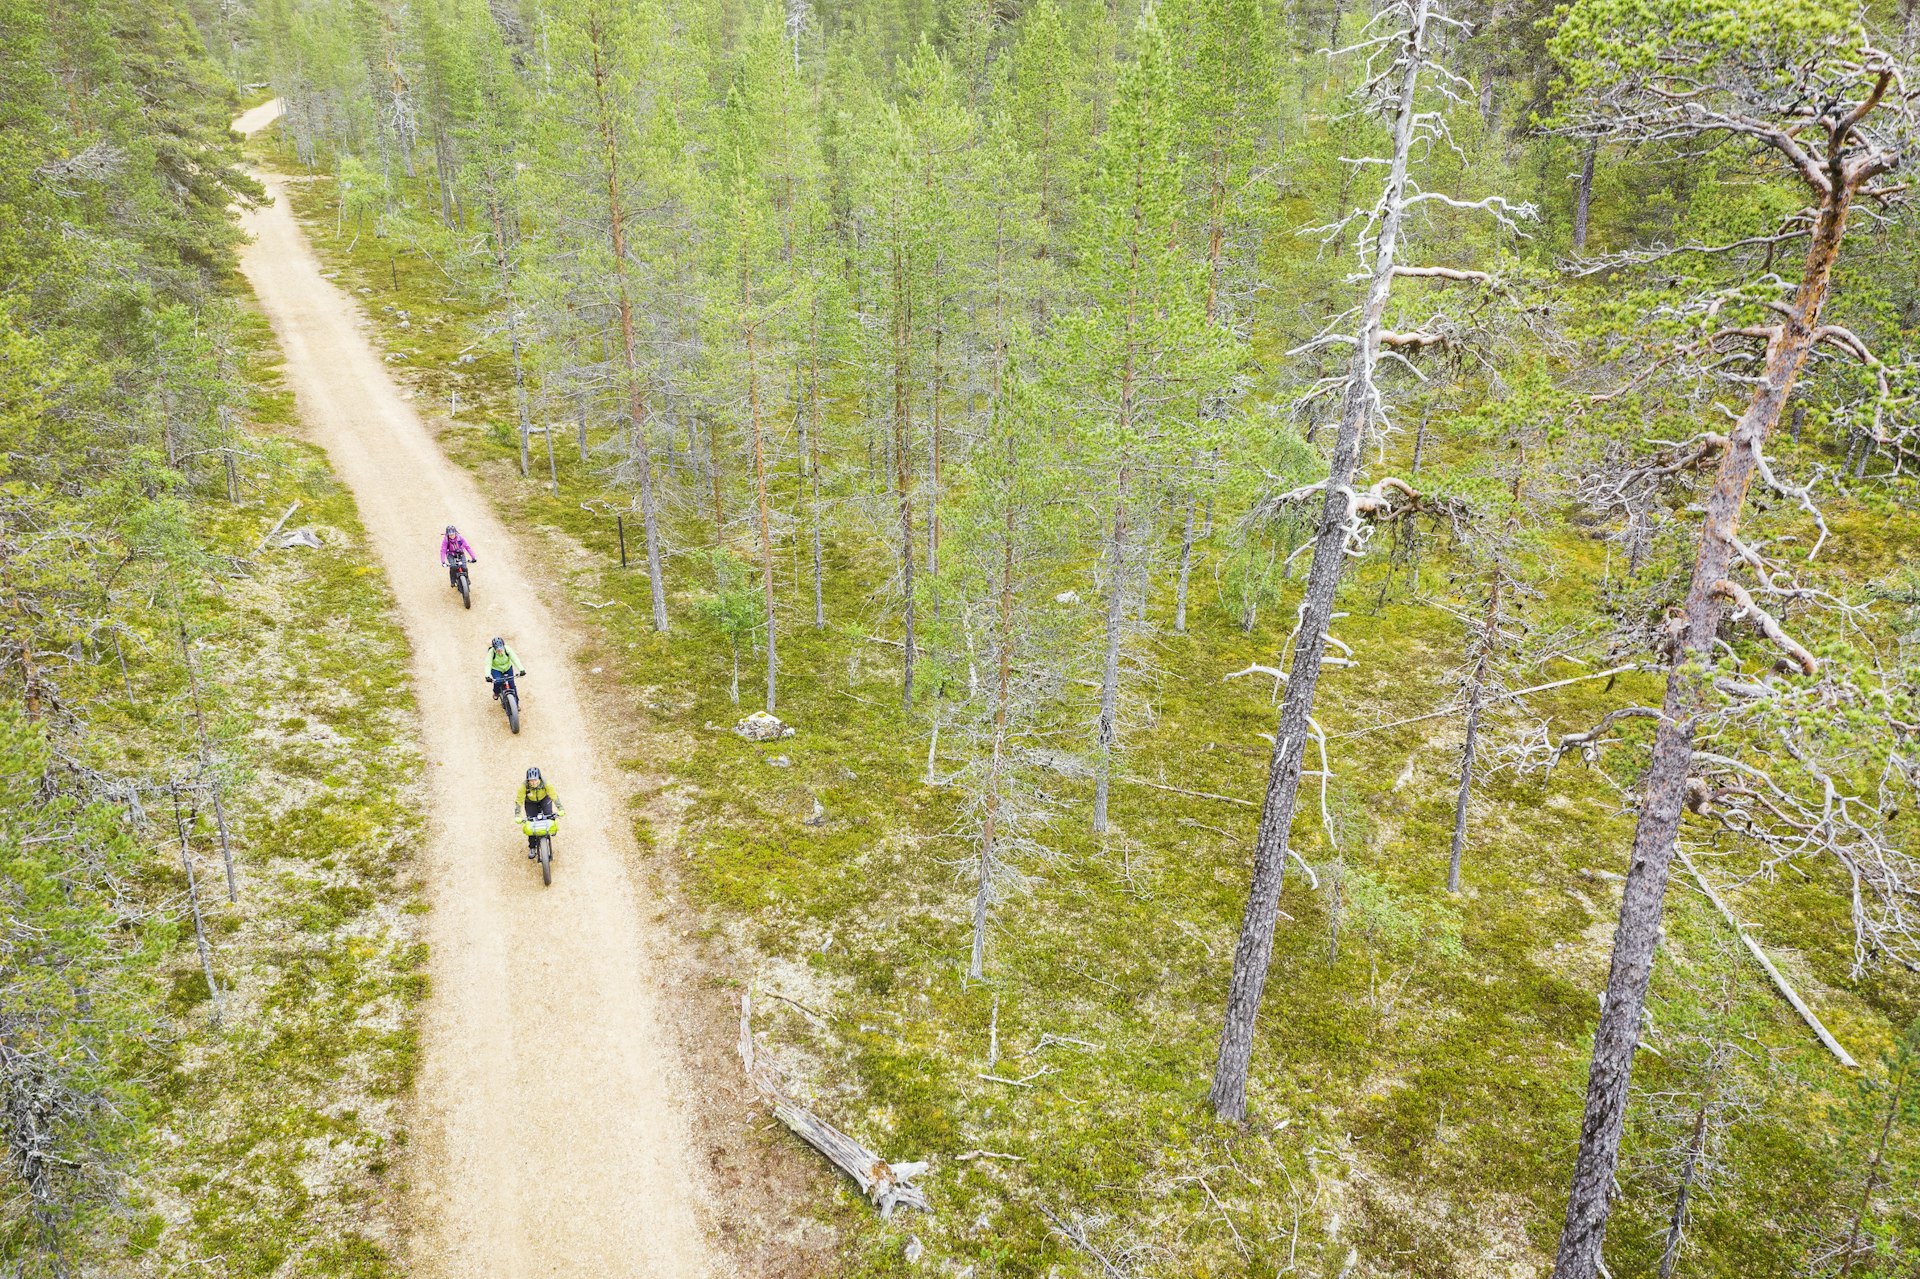 Cycling on electric fat bikes through Urho Kekkonen National Park